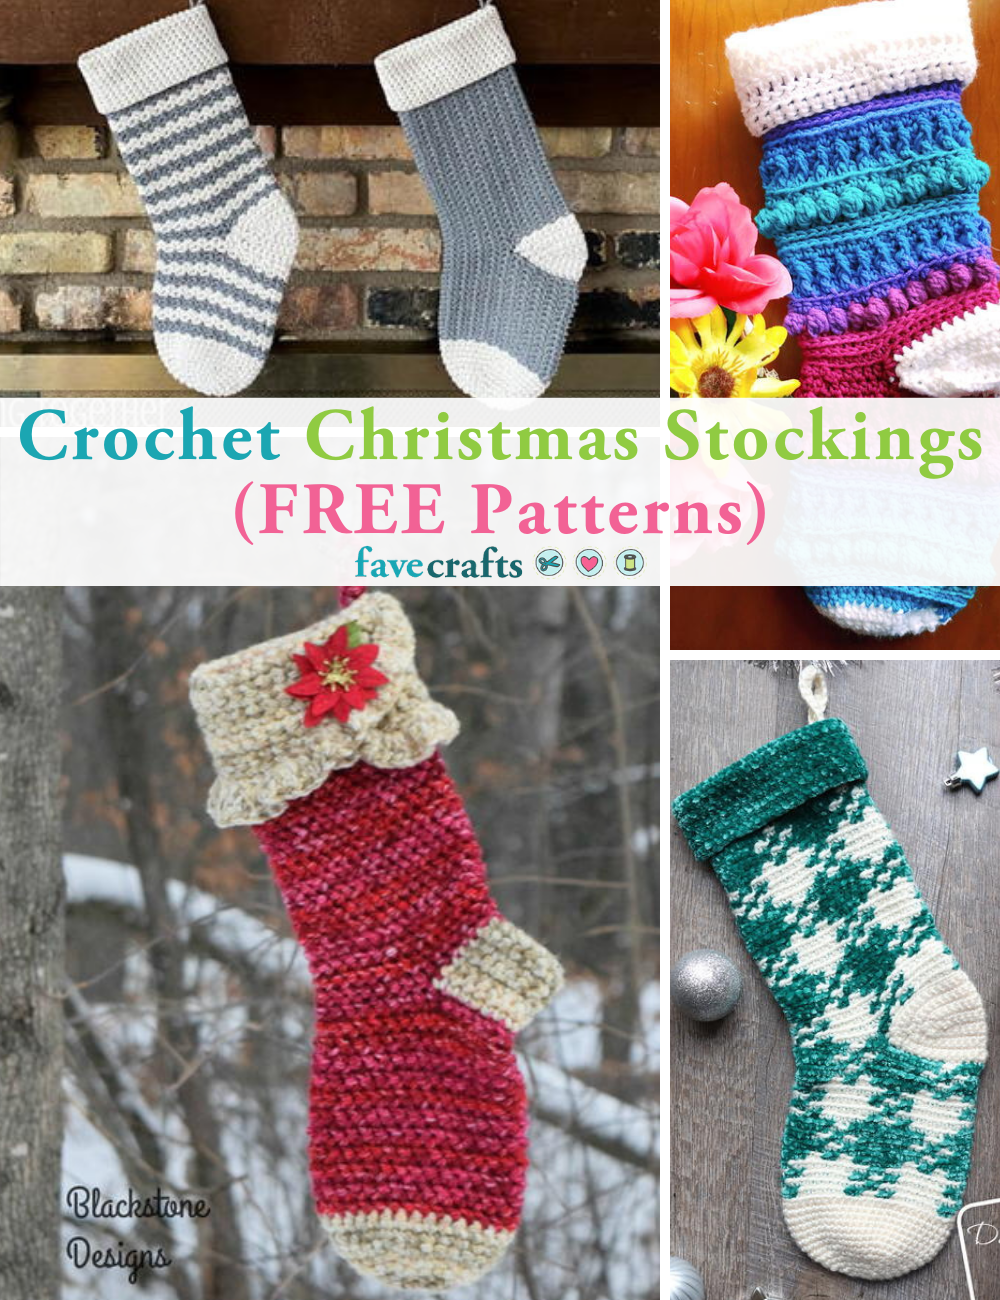 9 Crochet Christmas Stockings FREE Patterns   FaveCrafts.com